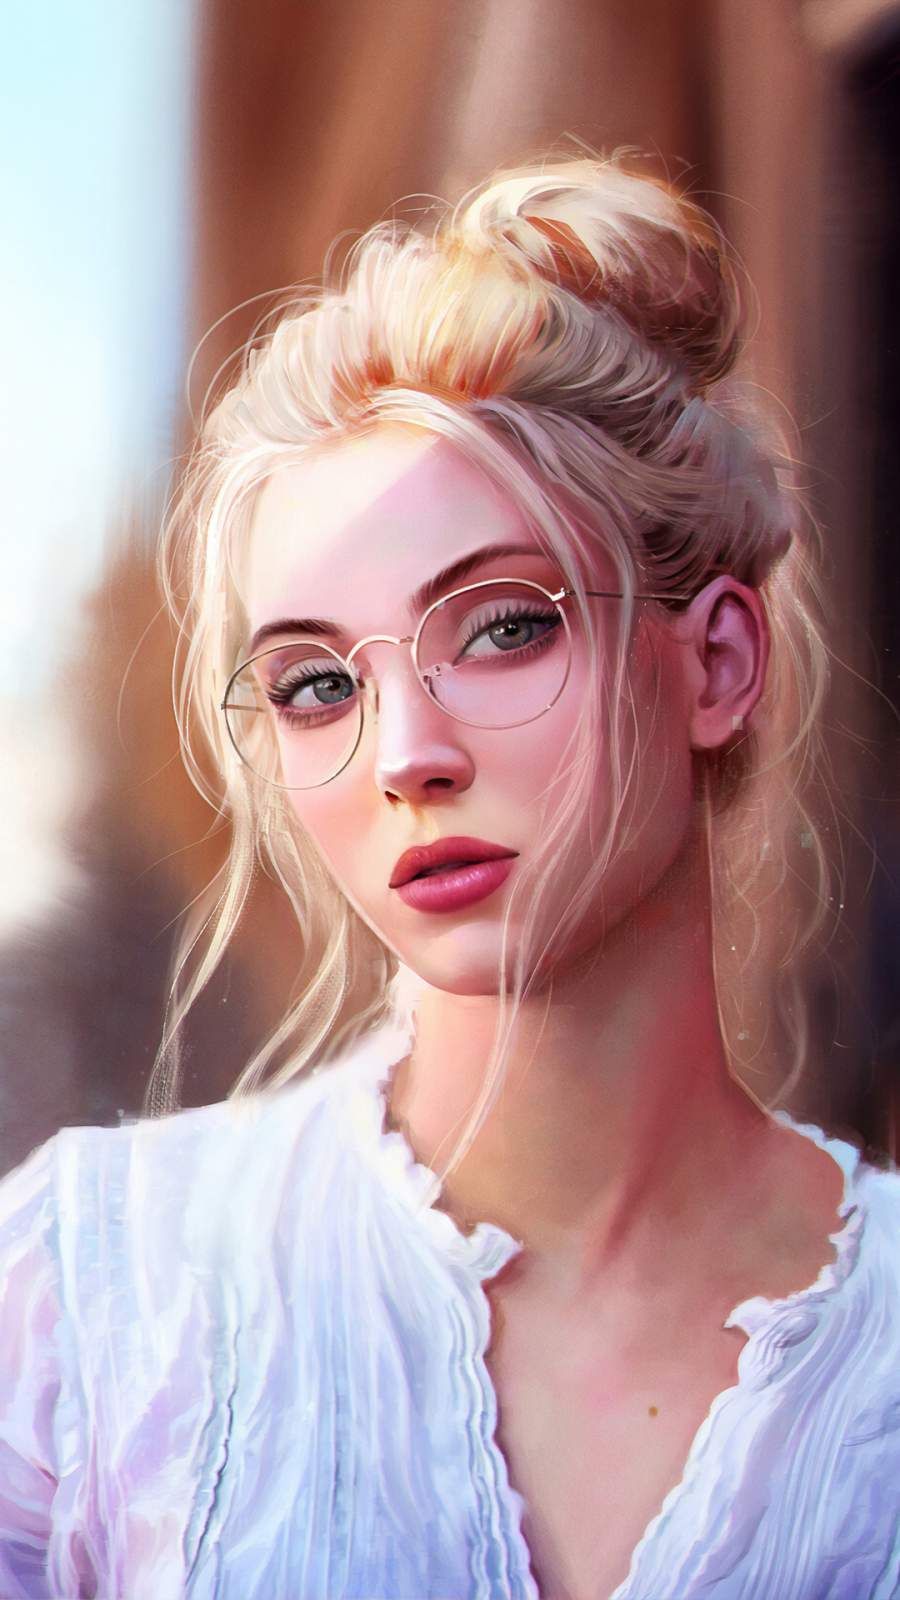 Girl with Glasses Artistic Portrait .com